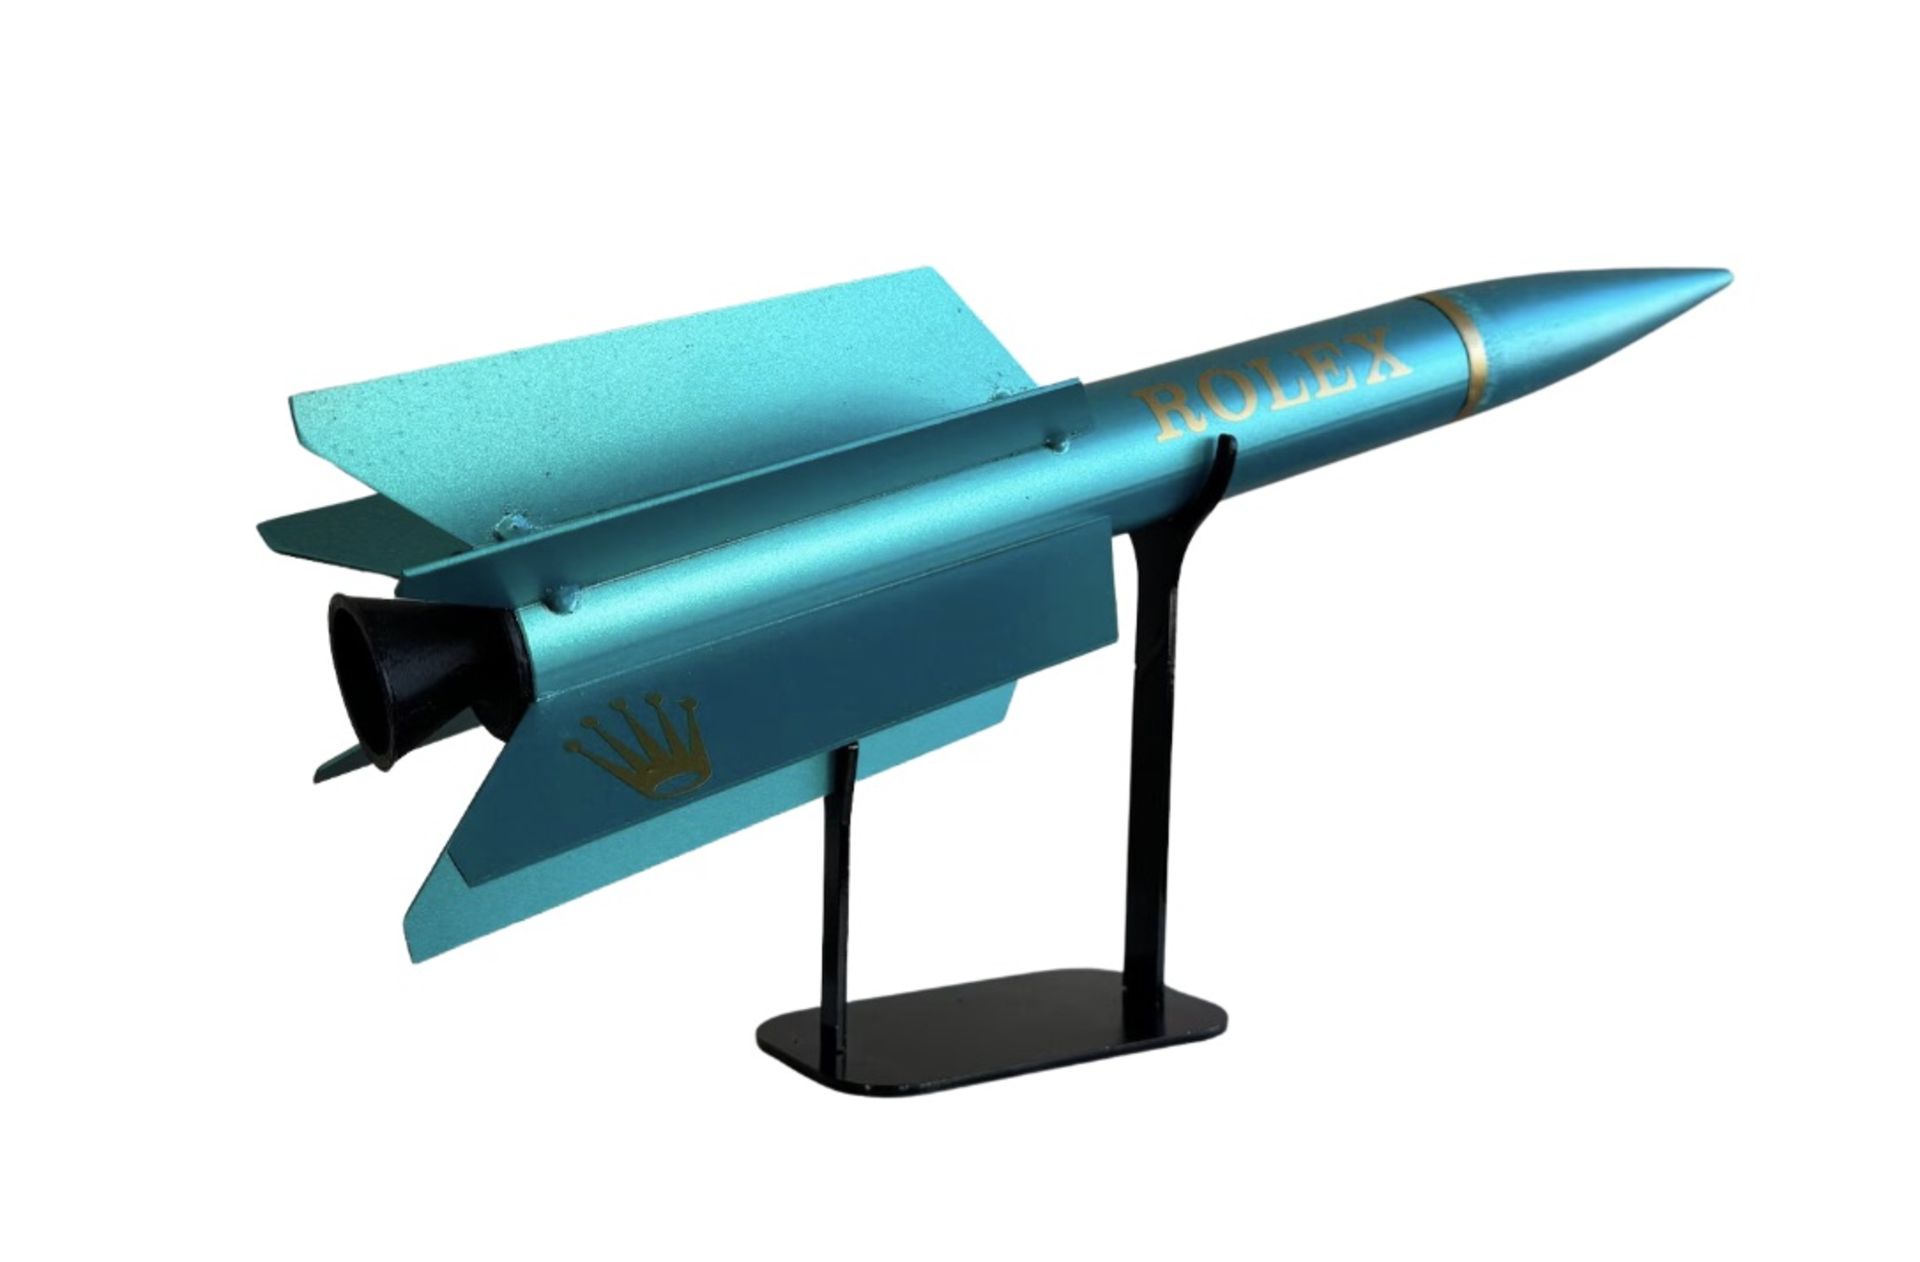 Rolex Rocket Advertisement Desk Model Display - Image 5 of 6